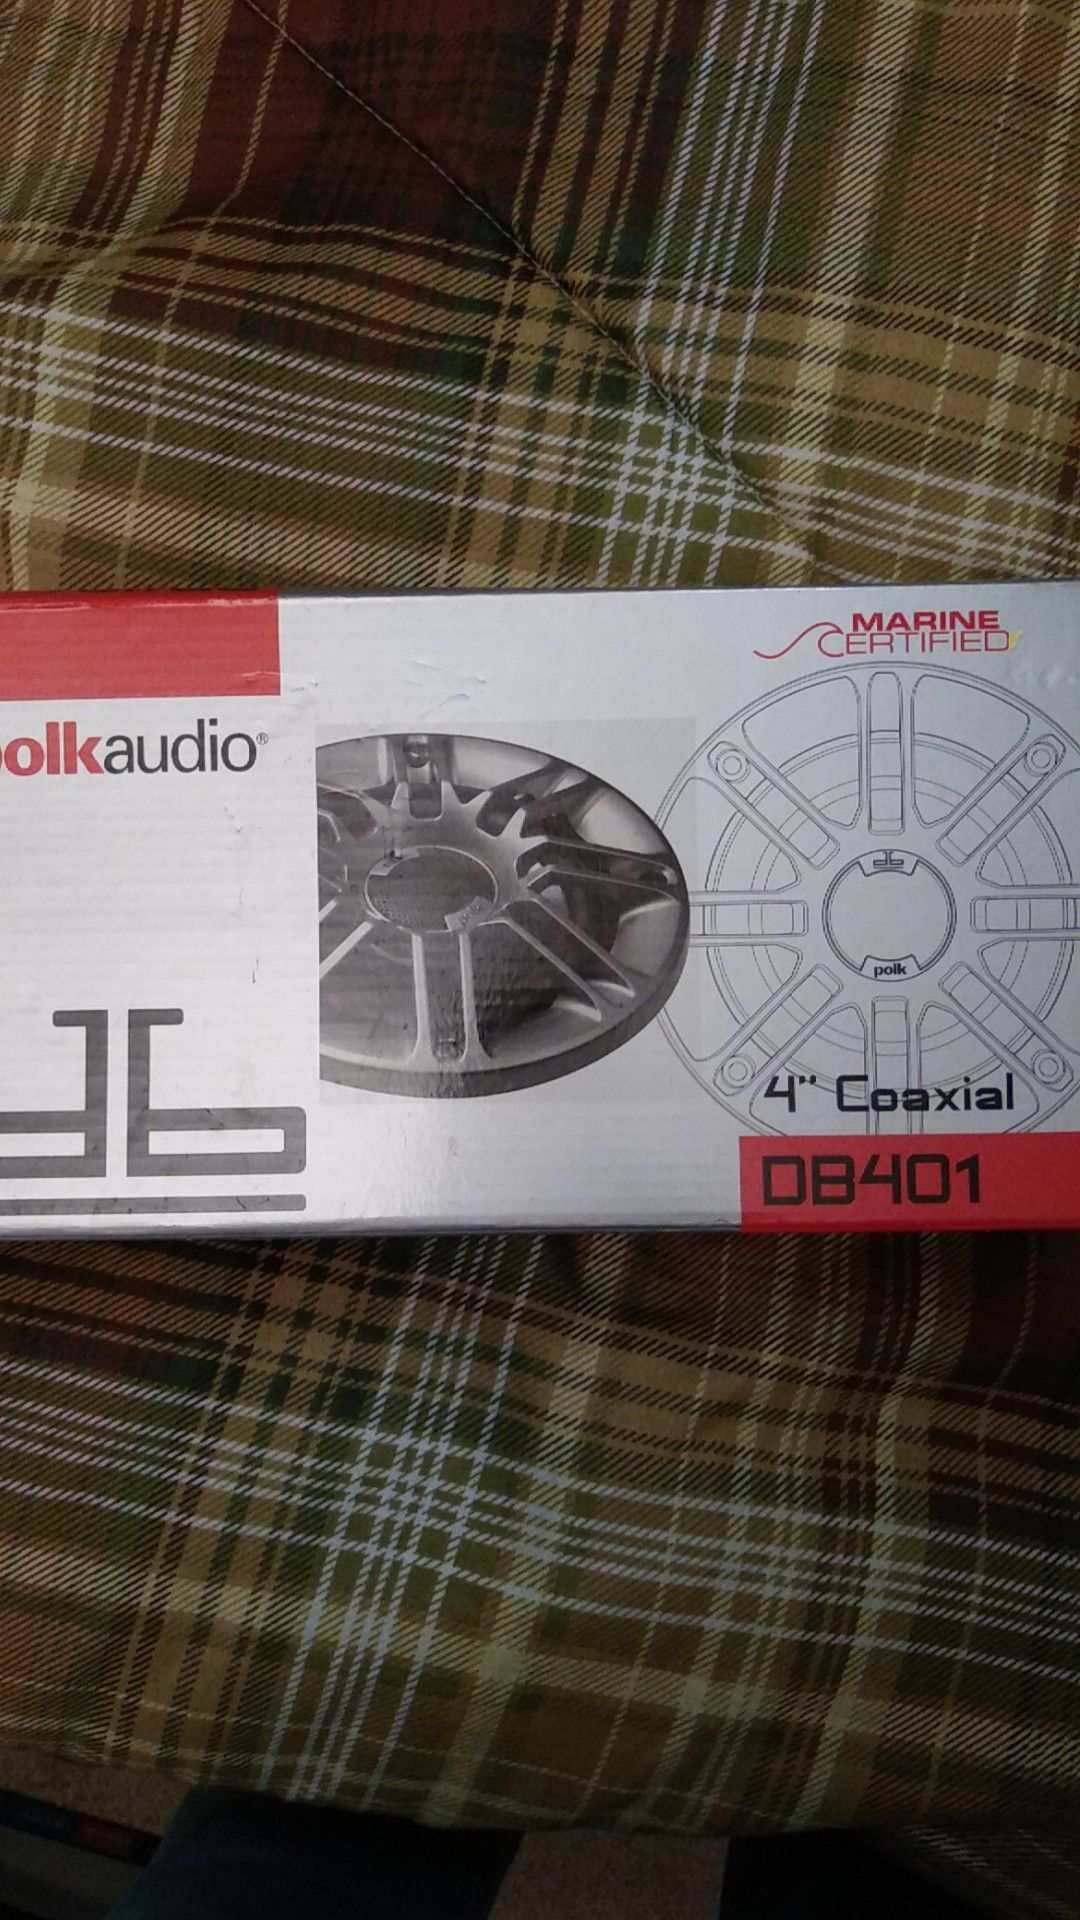 Polk audio 4" coaxial marine certified